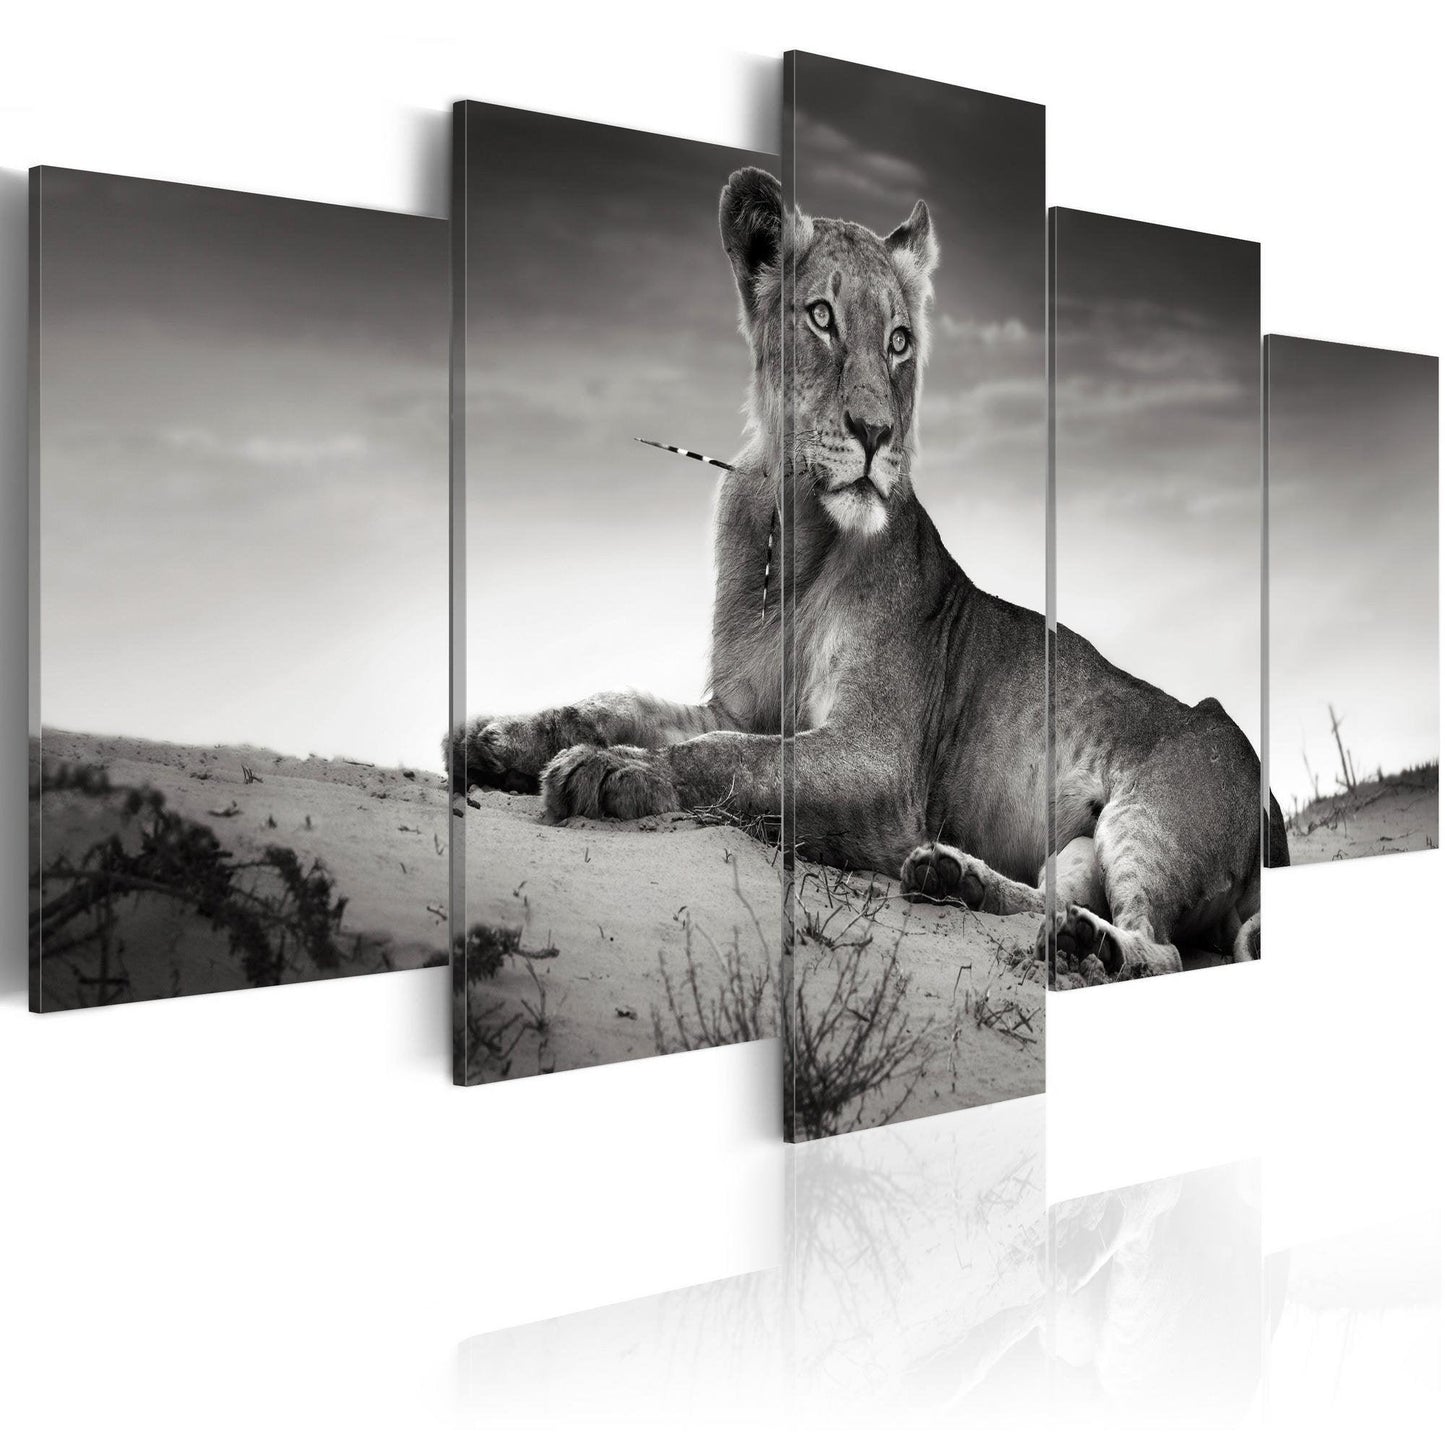 Canvas Print - Lioness in a desert - www.trendingbestsellers.com